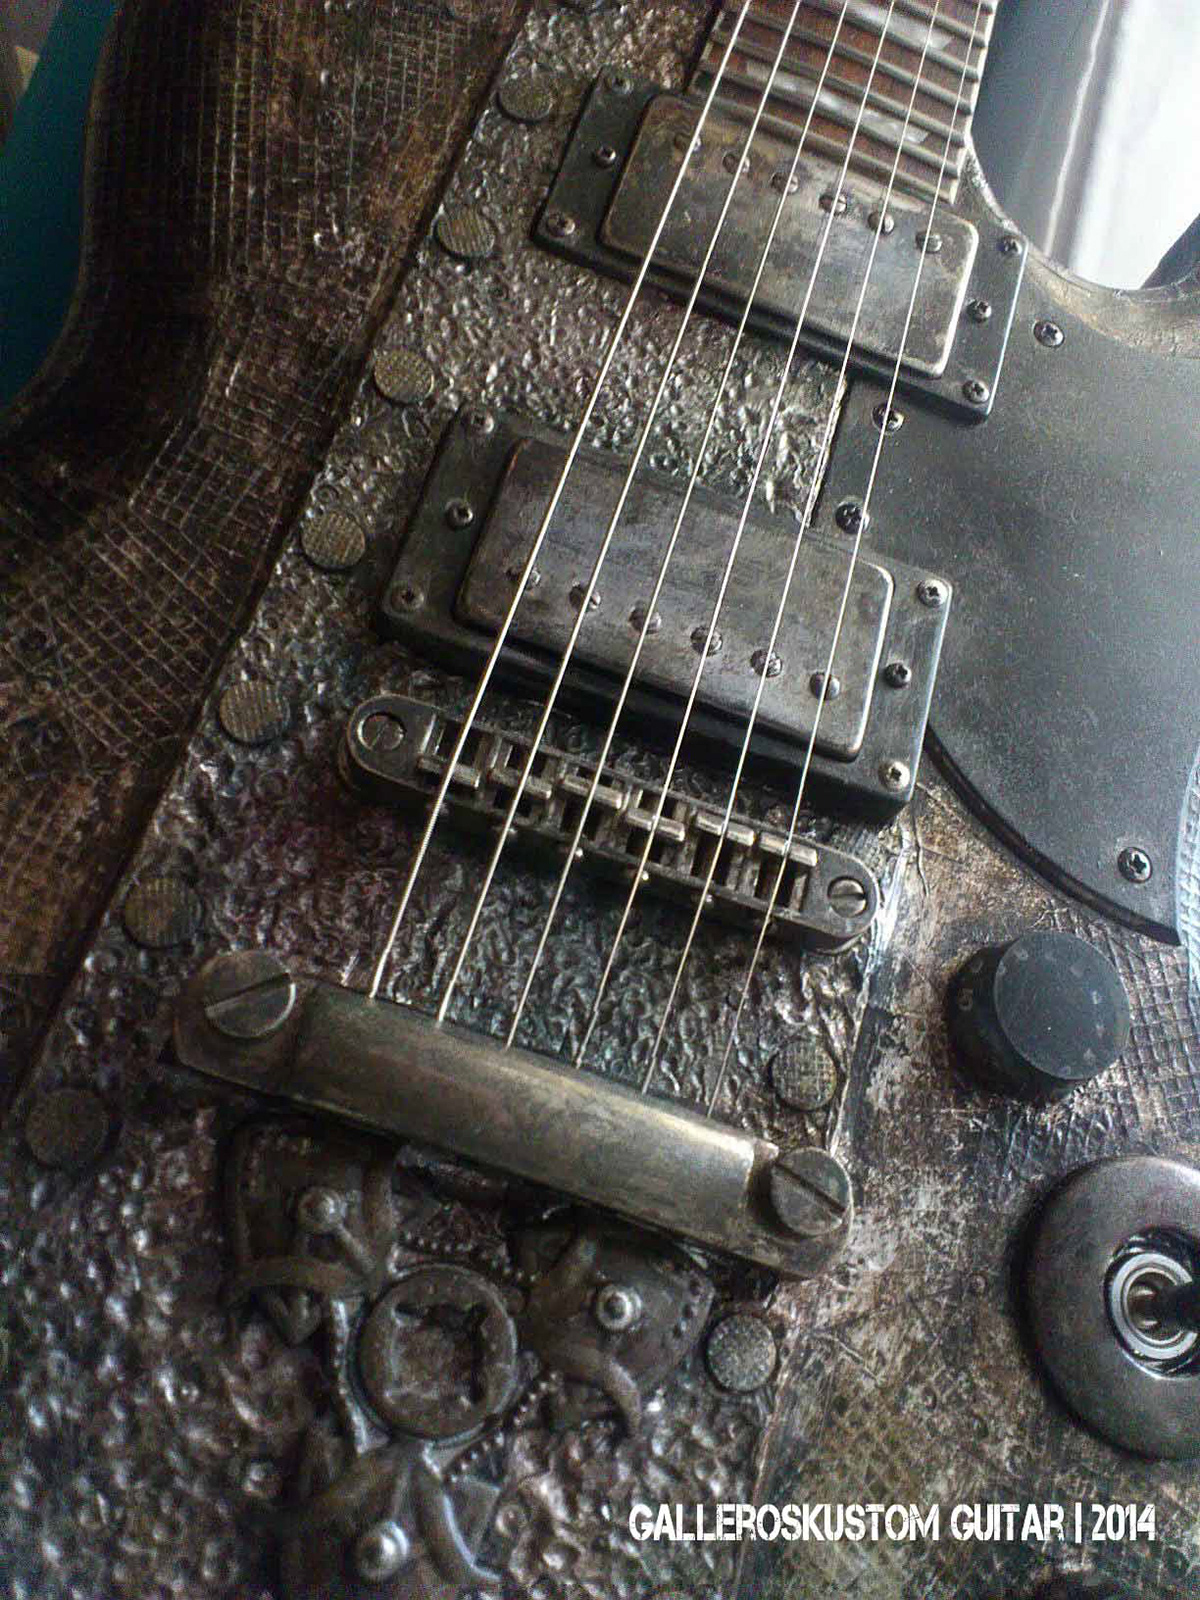 esp guitars KENT GALLEROS PERMANENT PENS Acrylic paint CRAFT FOAM loloy galleros faux metal aged finish rustic punk loloy